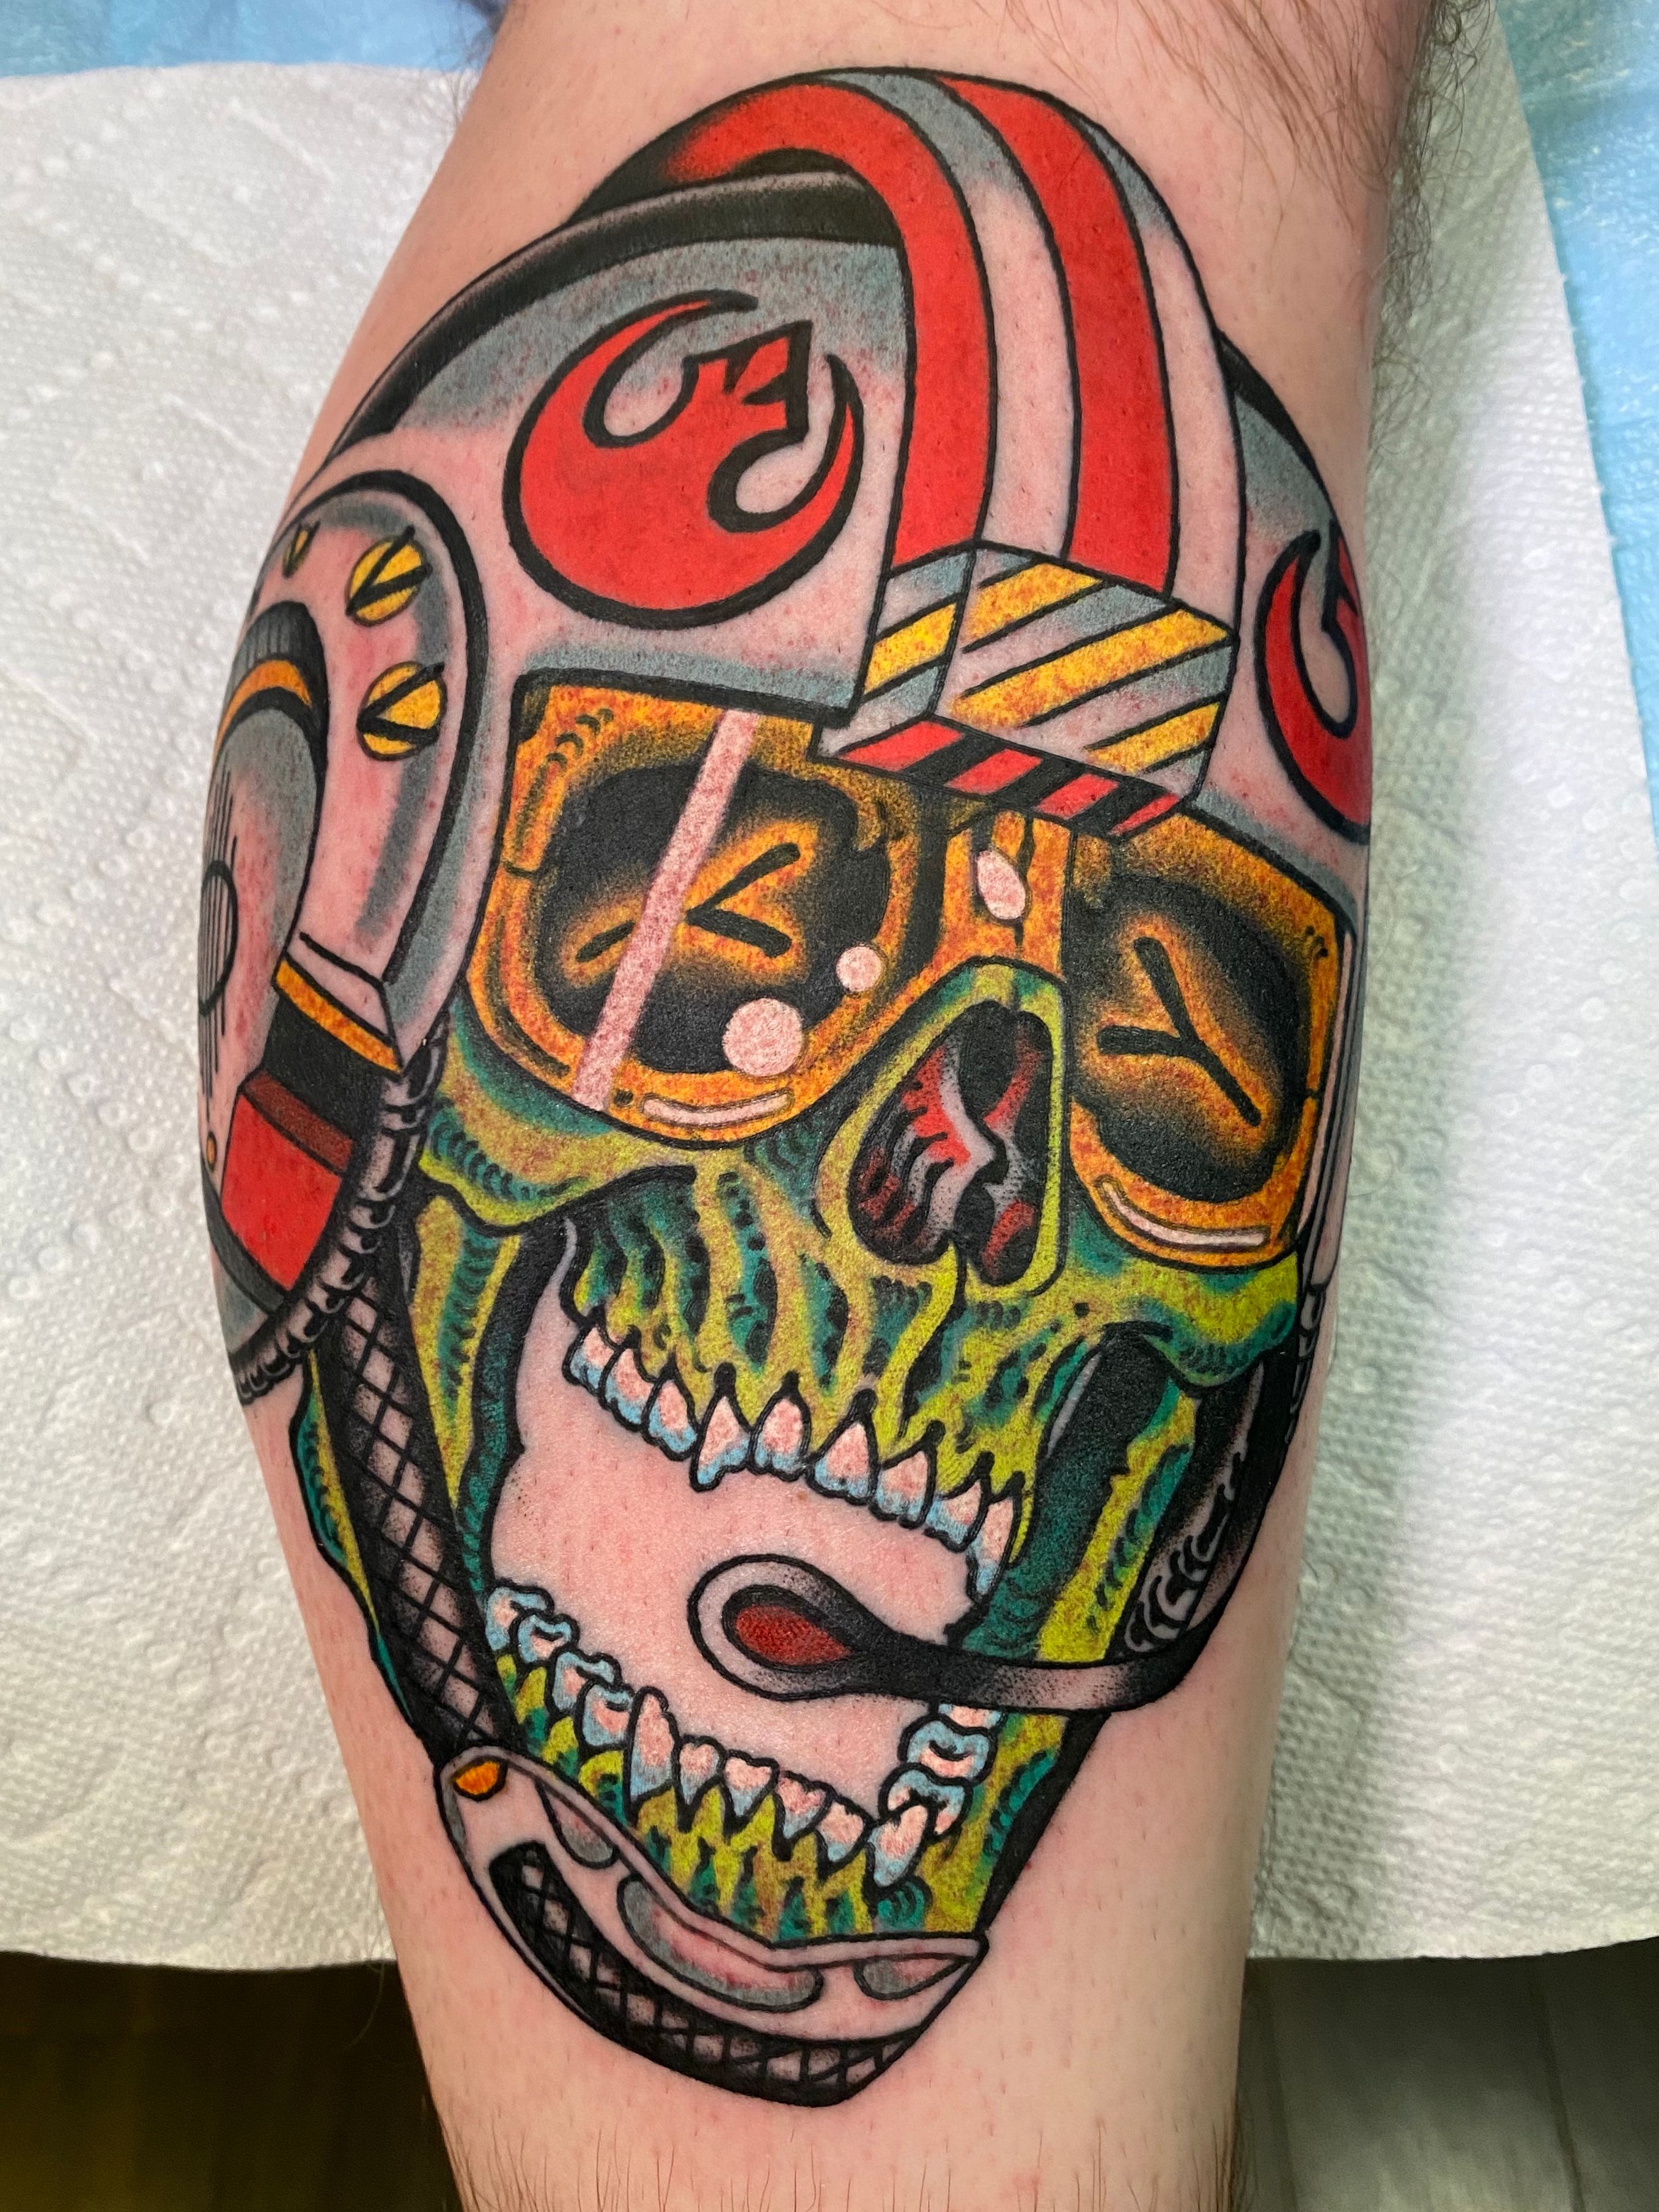 COREY BLAU - Rebel Star Wars Skull Helmet - Tattoo Style Illustration